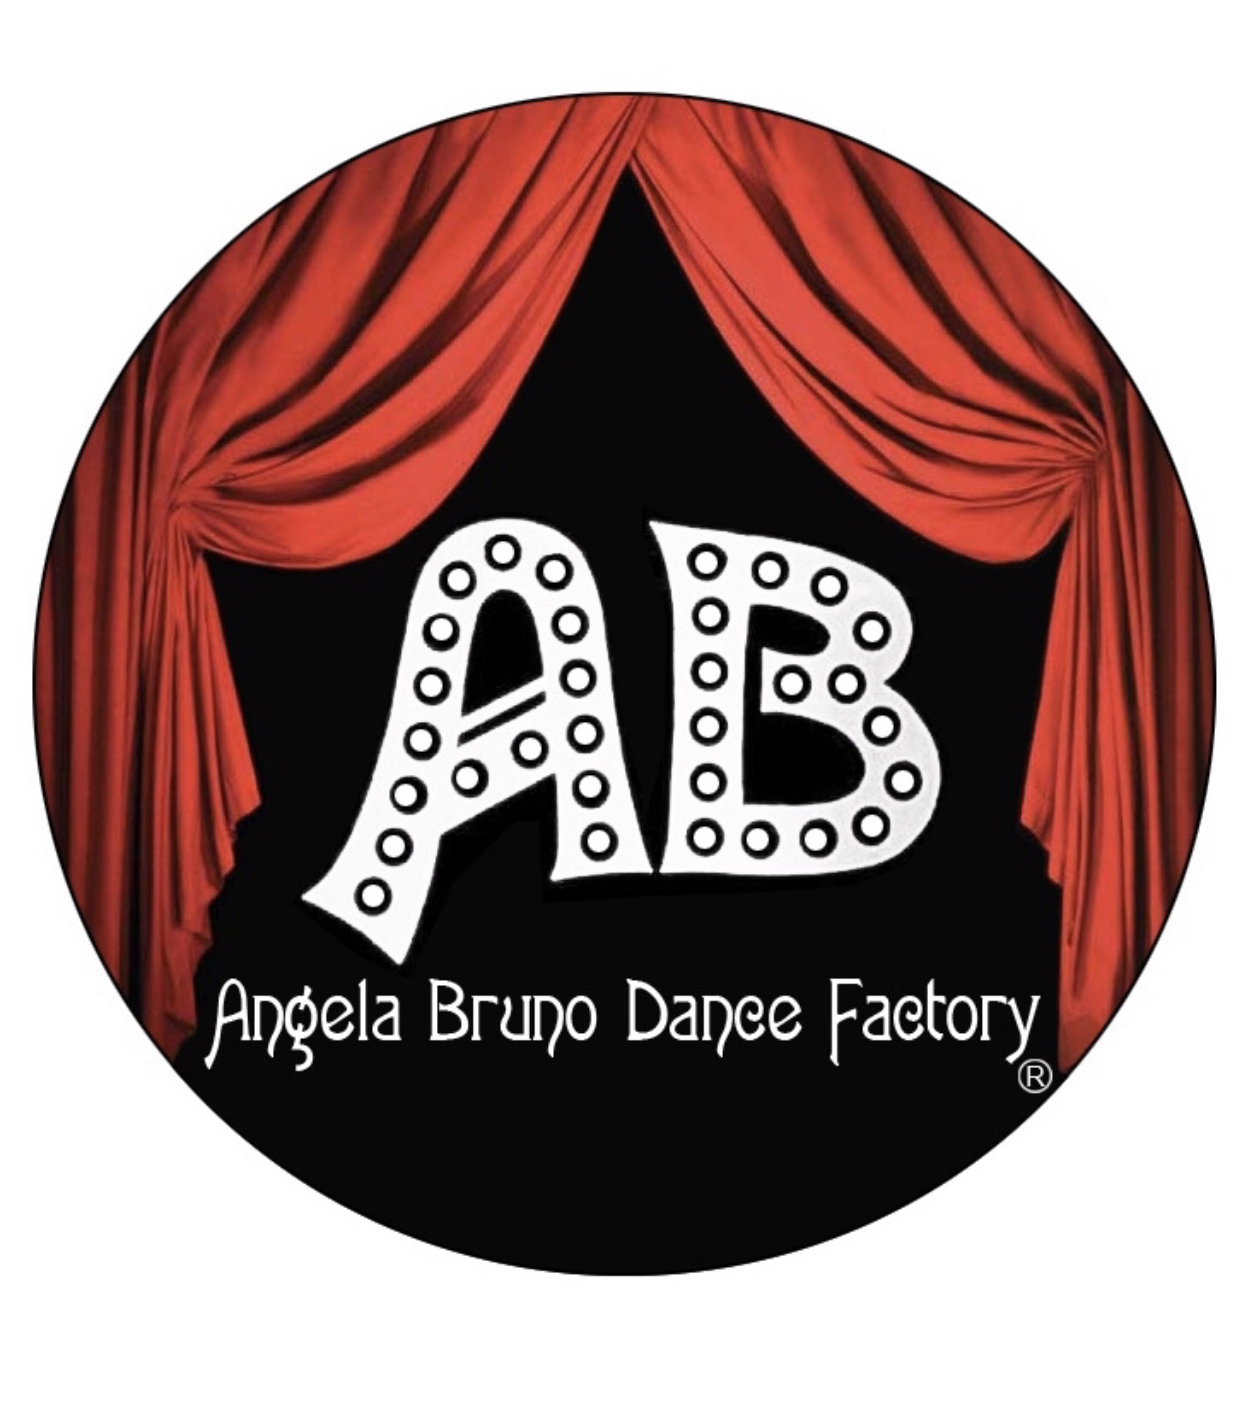 Angela Bruno Dance Factory